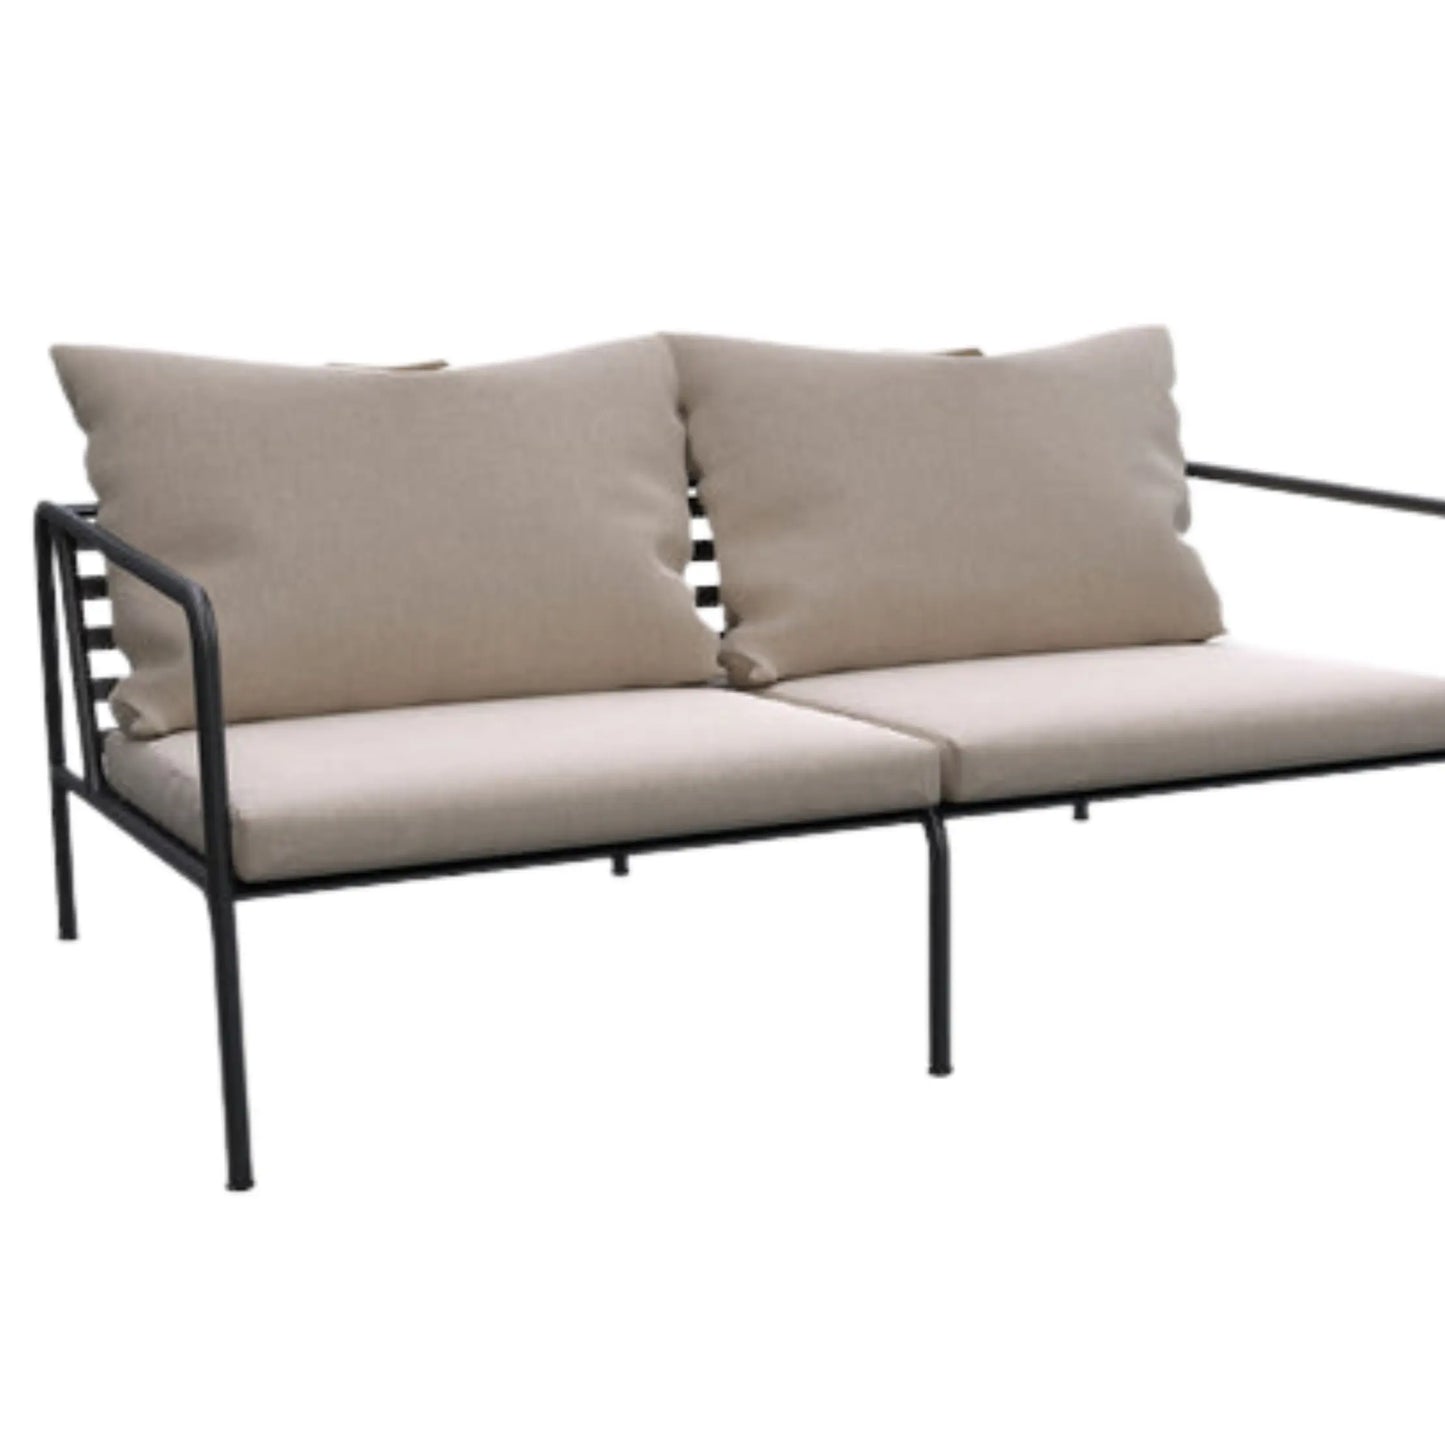 AVON Outdoor Lounge Sofa - Ash Danish Furniture Ltd